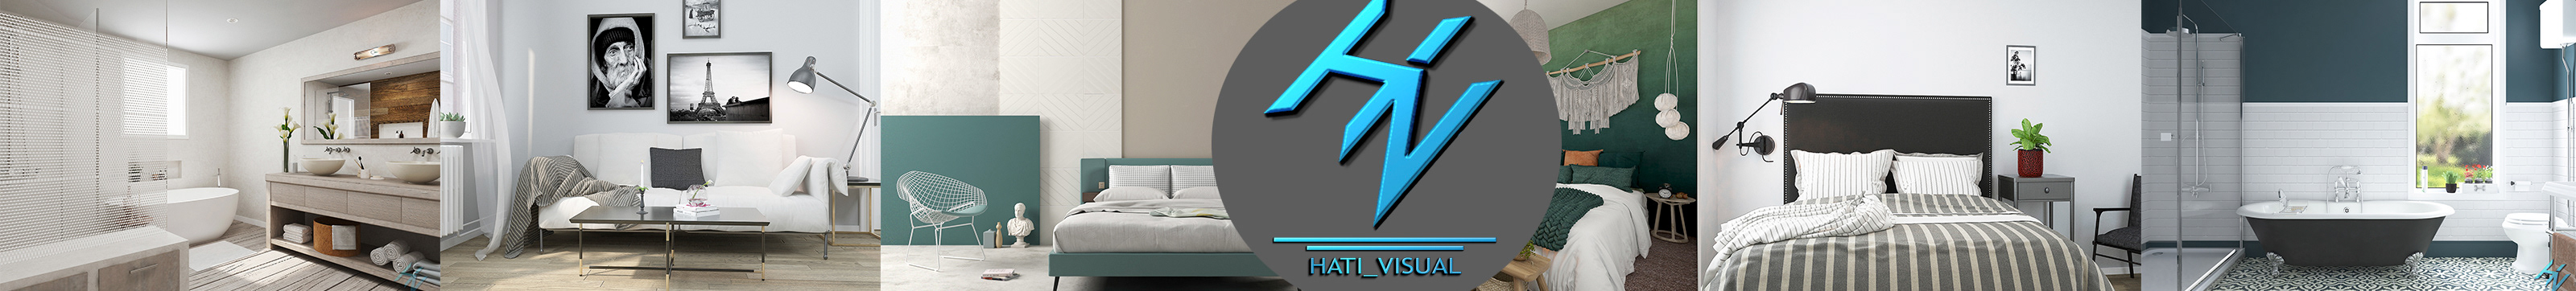 HATI VISUAL's profile banner